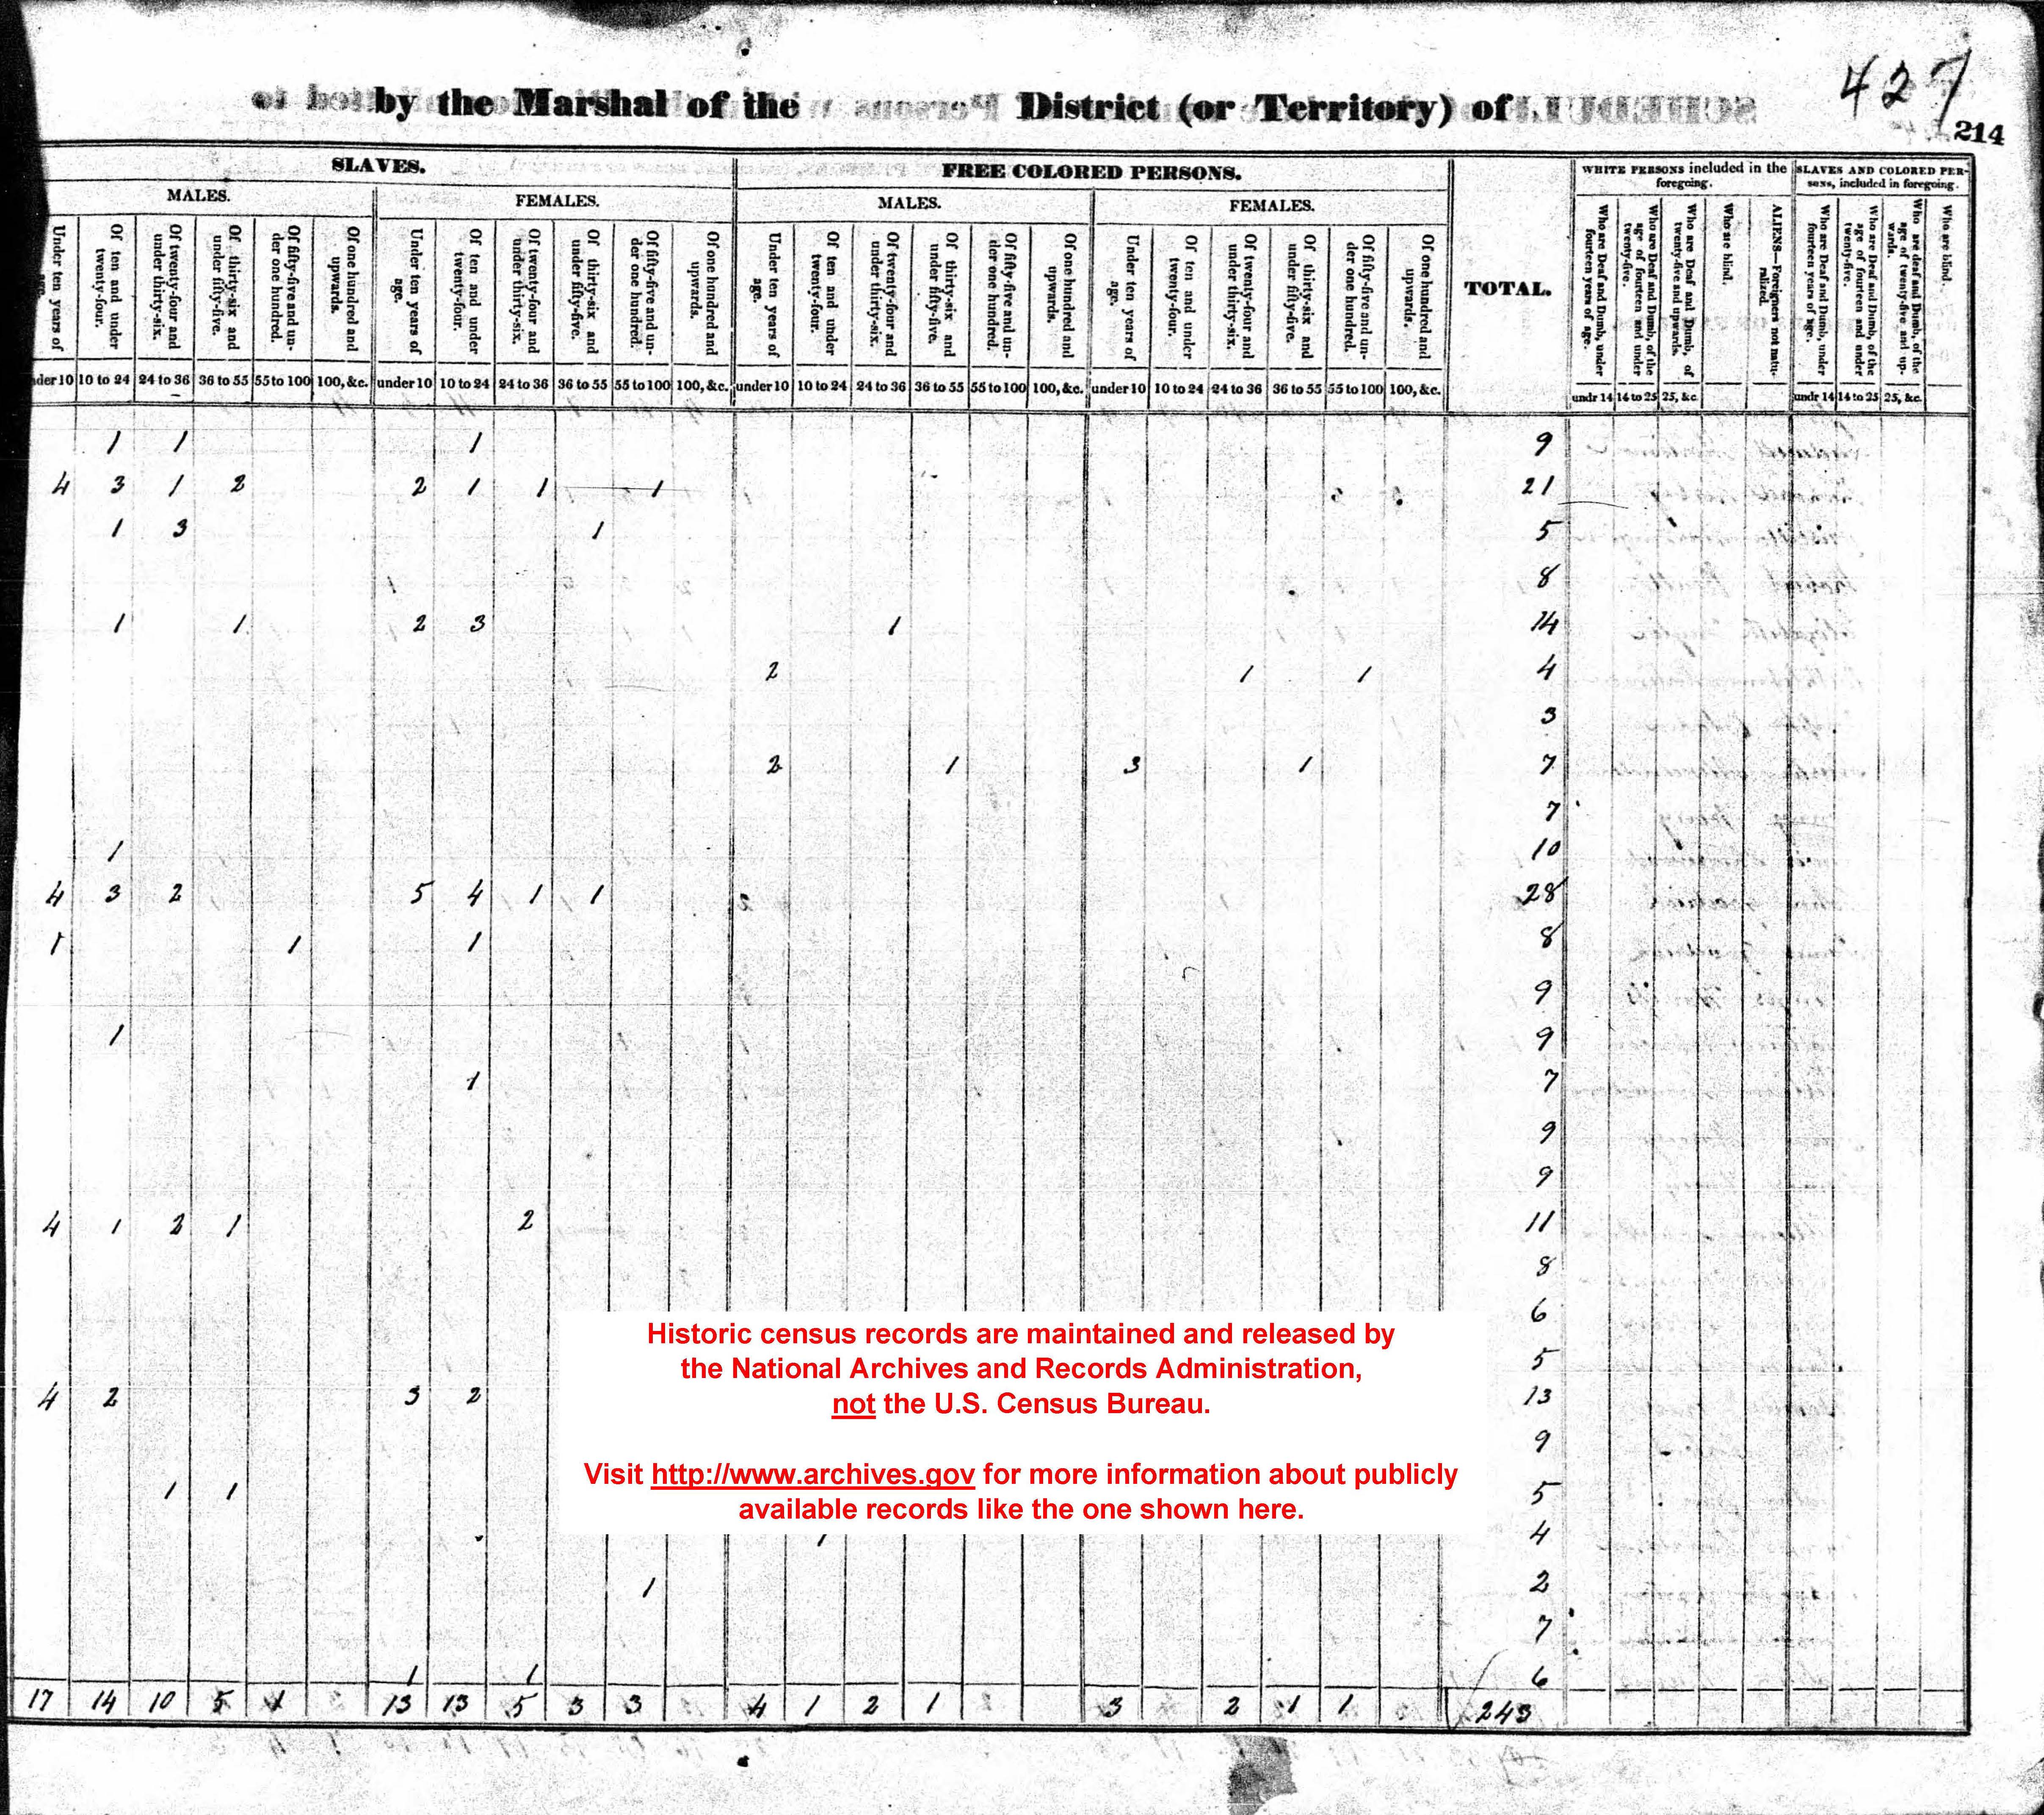 1830 Census Questionnaire, Page 2